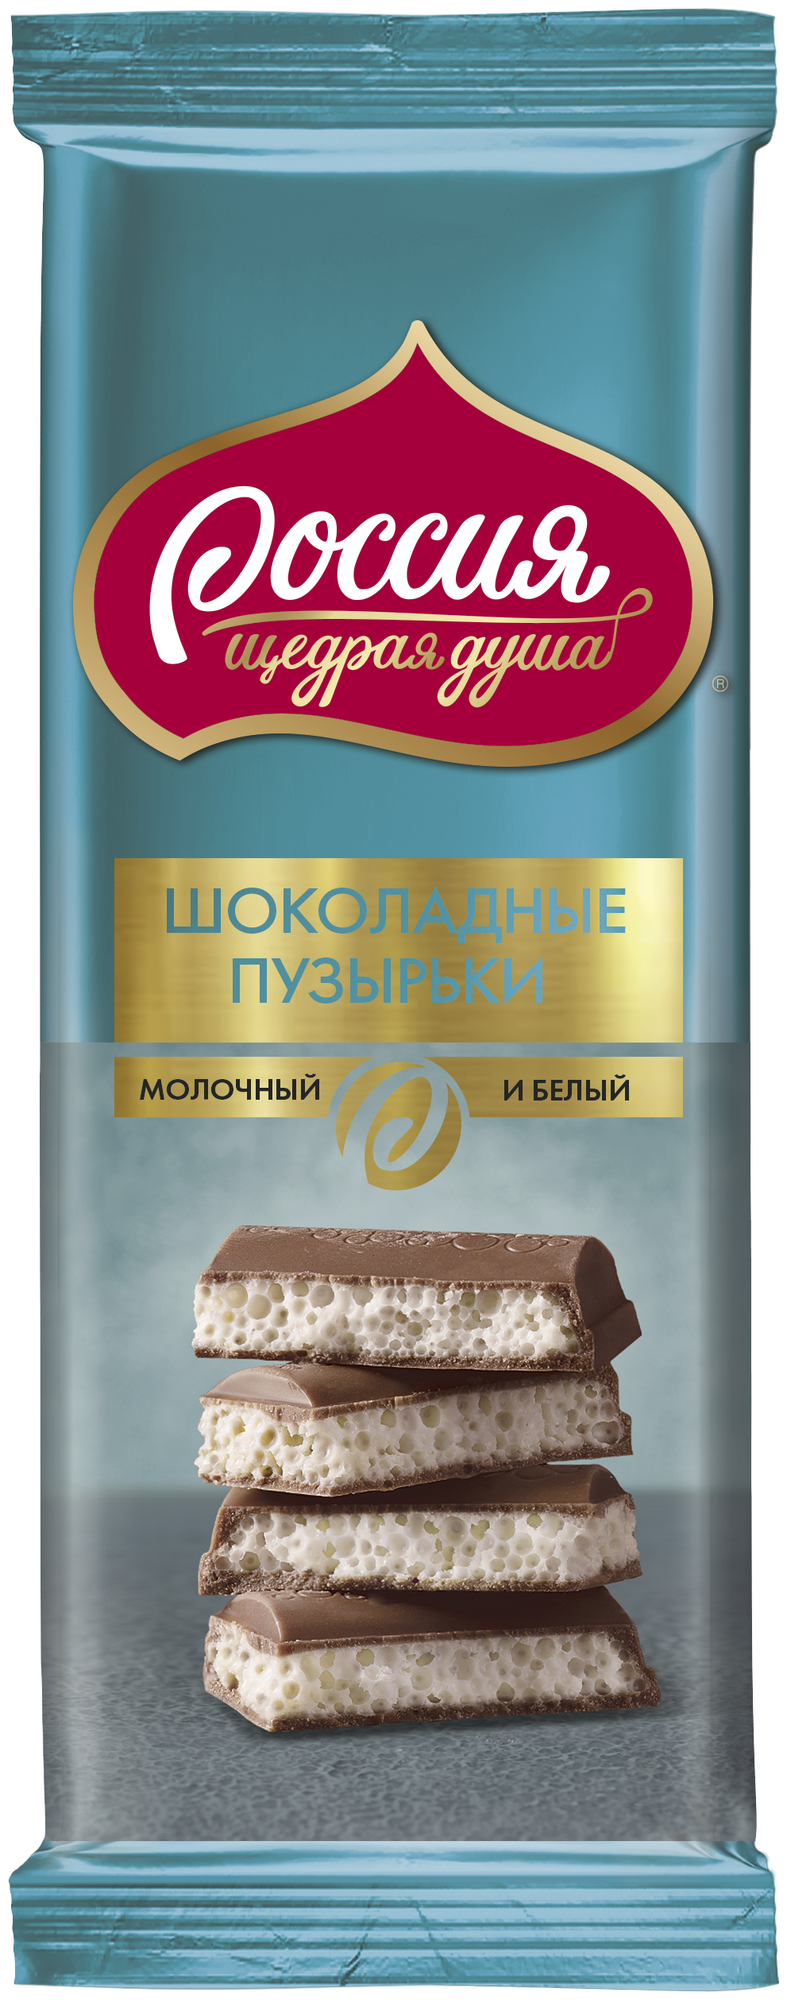 Шоколад Россия 82г/мол/Белый пористый